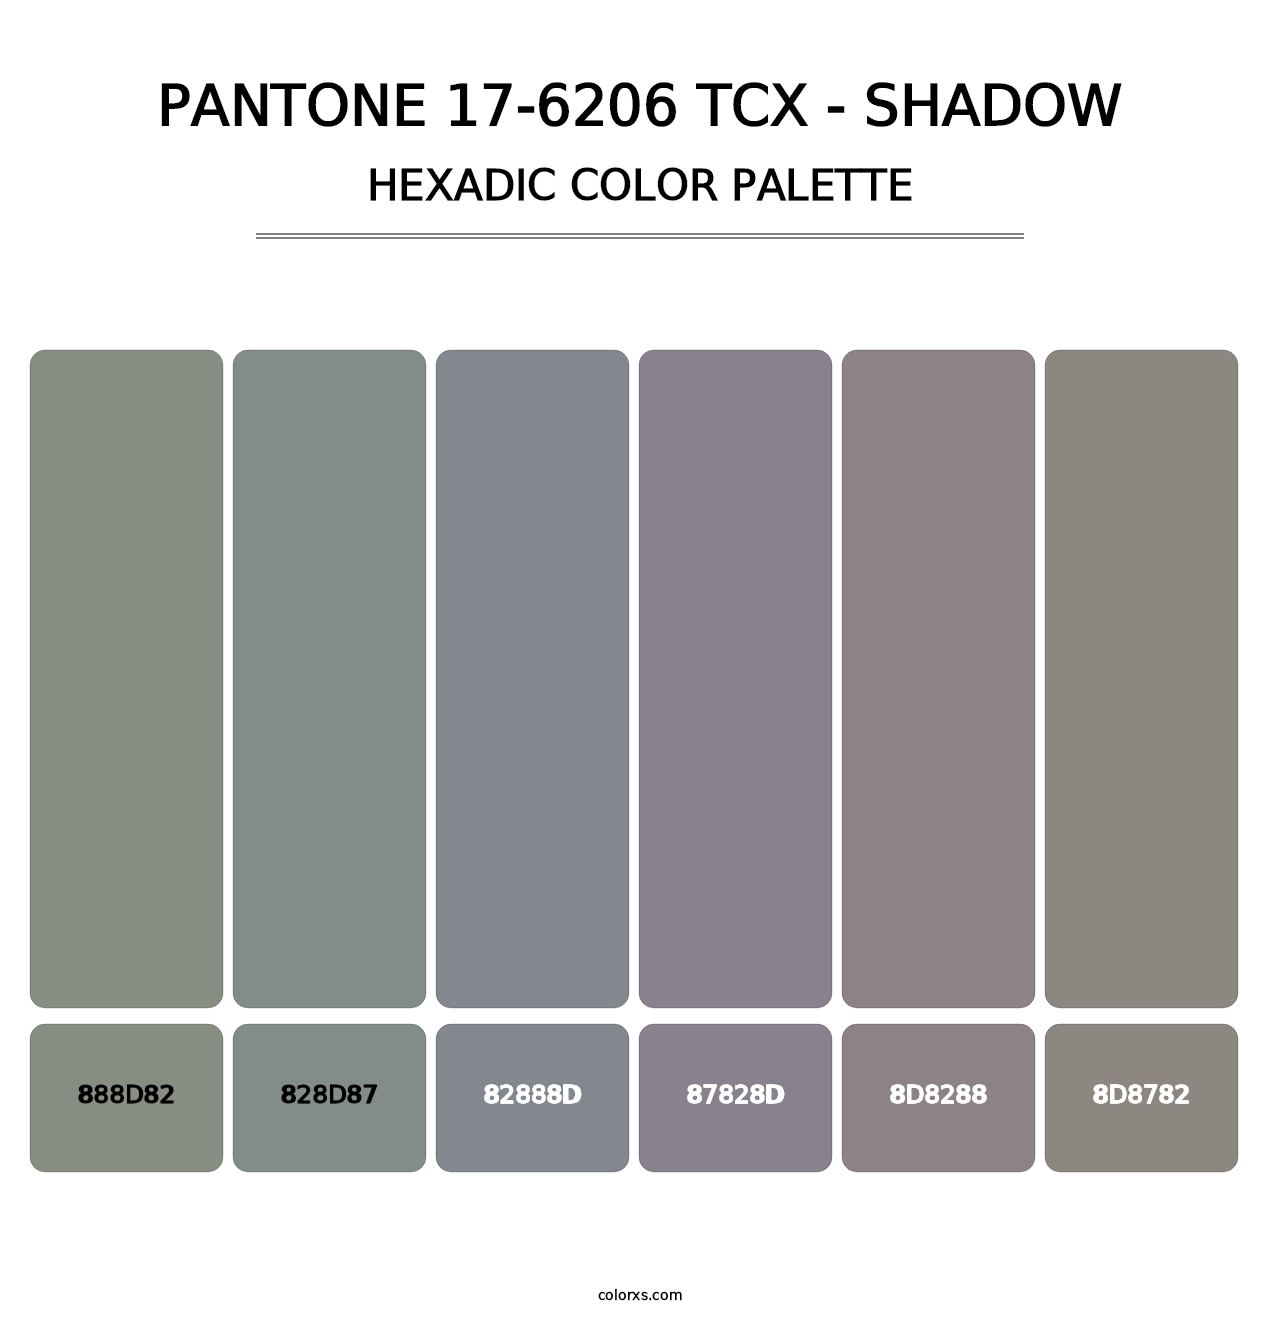 PANTONE 17-6206 TCX - Shadow - Hexadic Color Palette